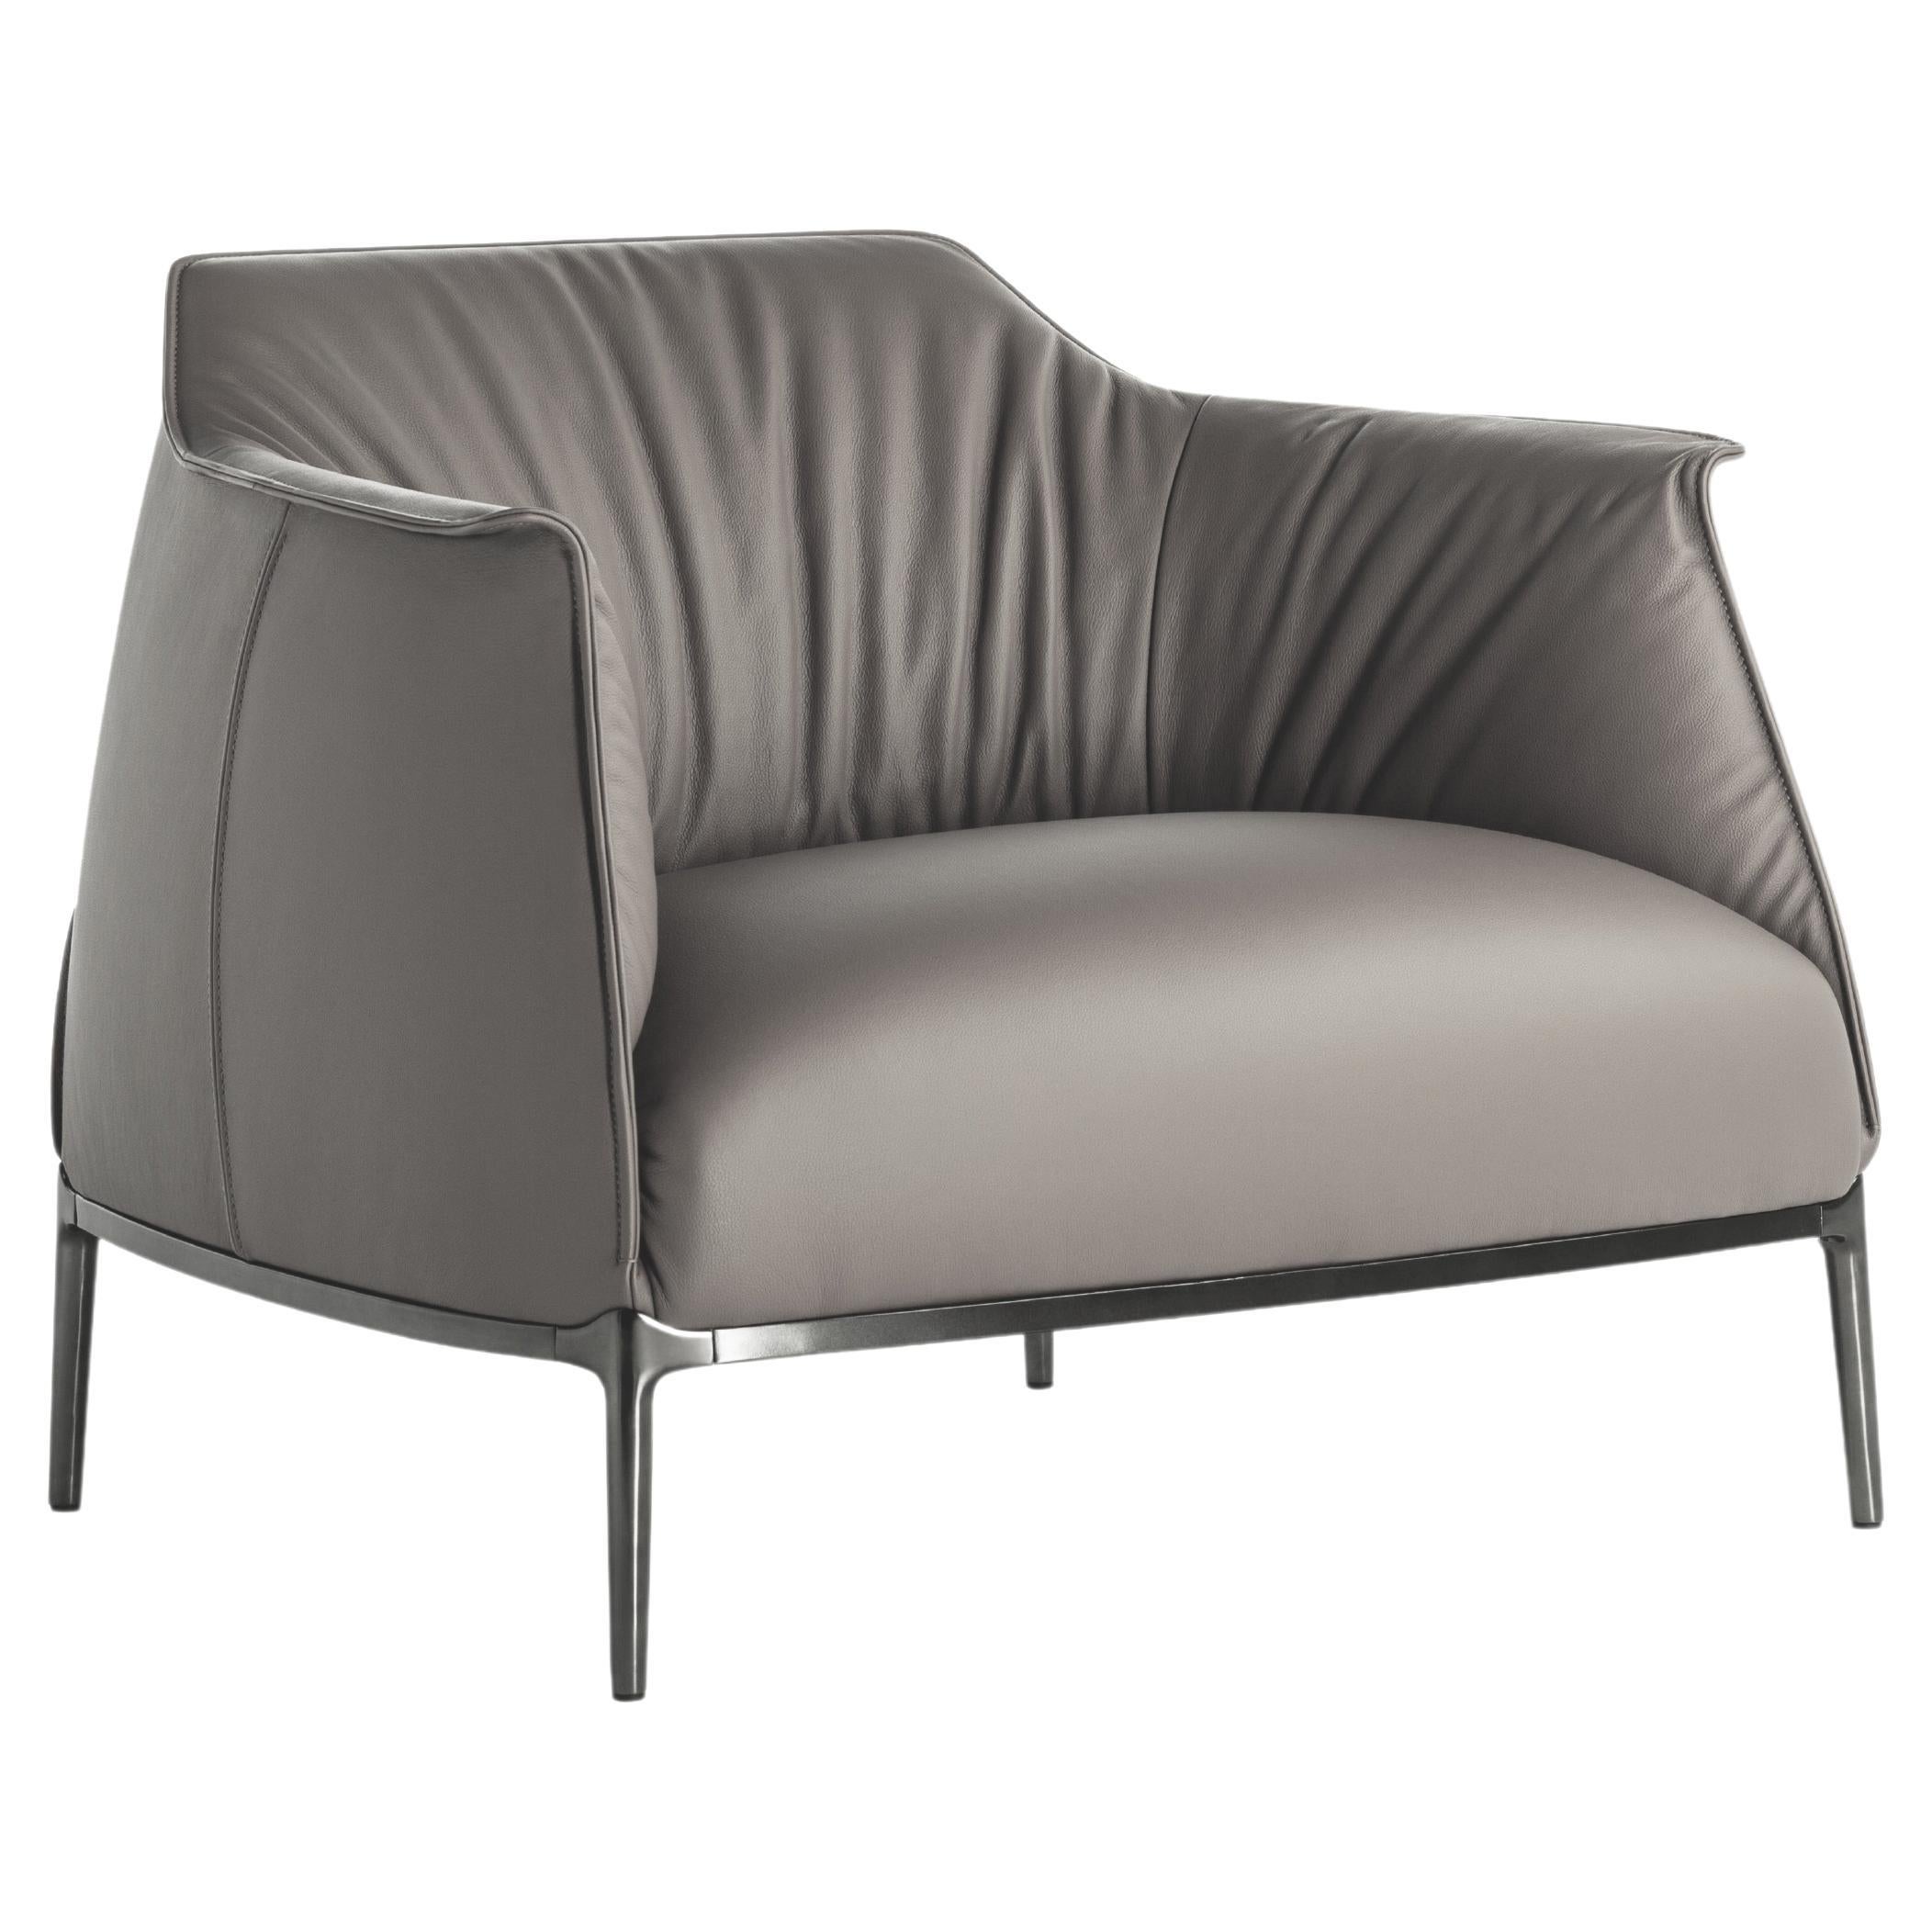 Archibald grand fauteuil en cuir véritable Pelle Sc 26 Topo gris clair en vente